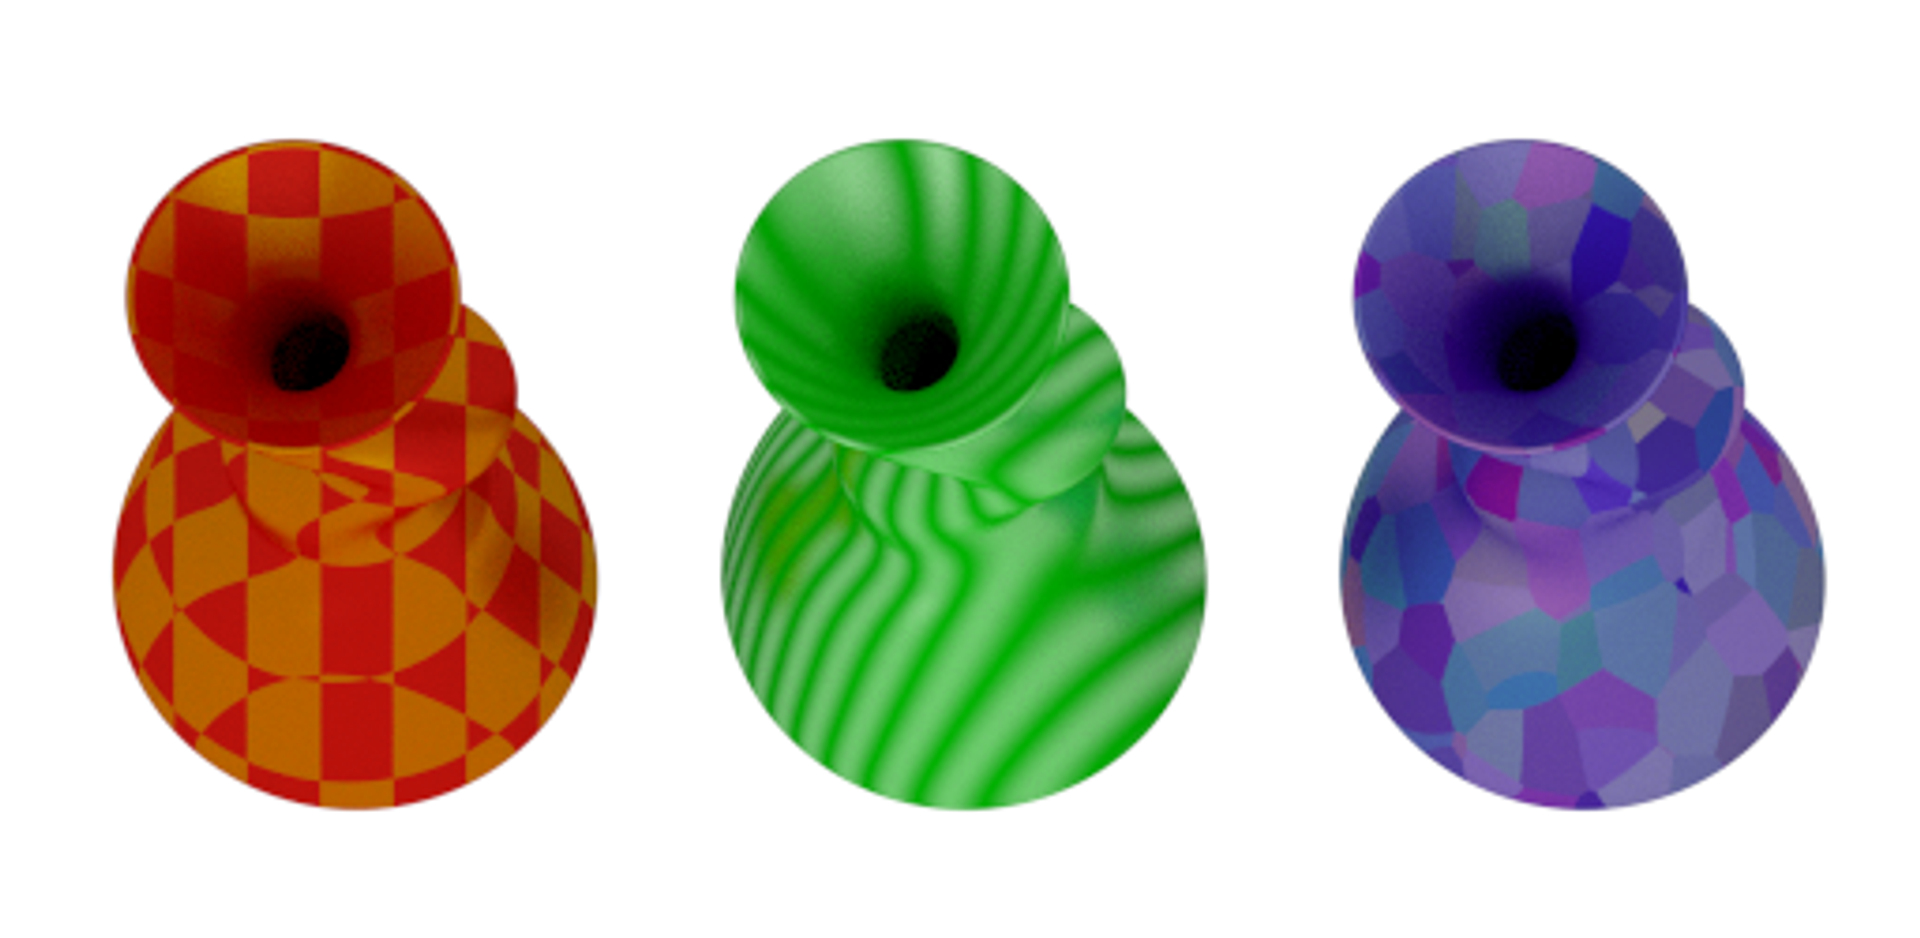 Colorful Vases Using Dual Color PLAs 1.75mm